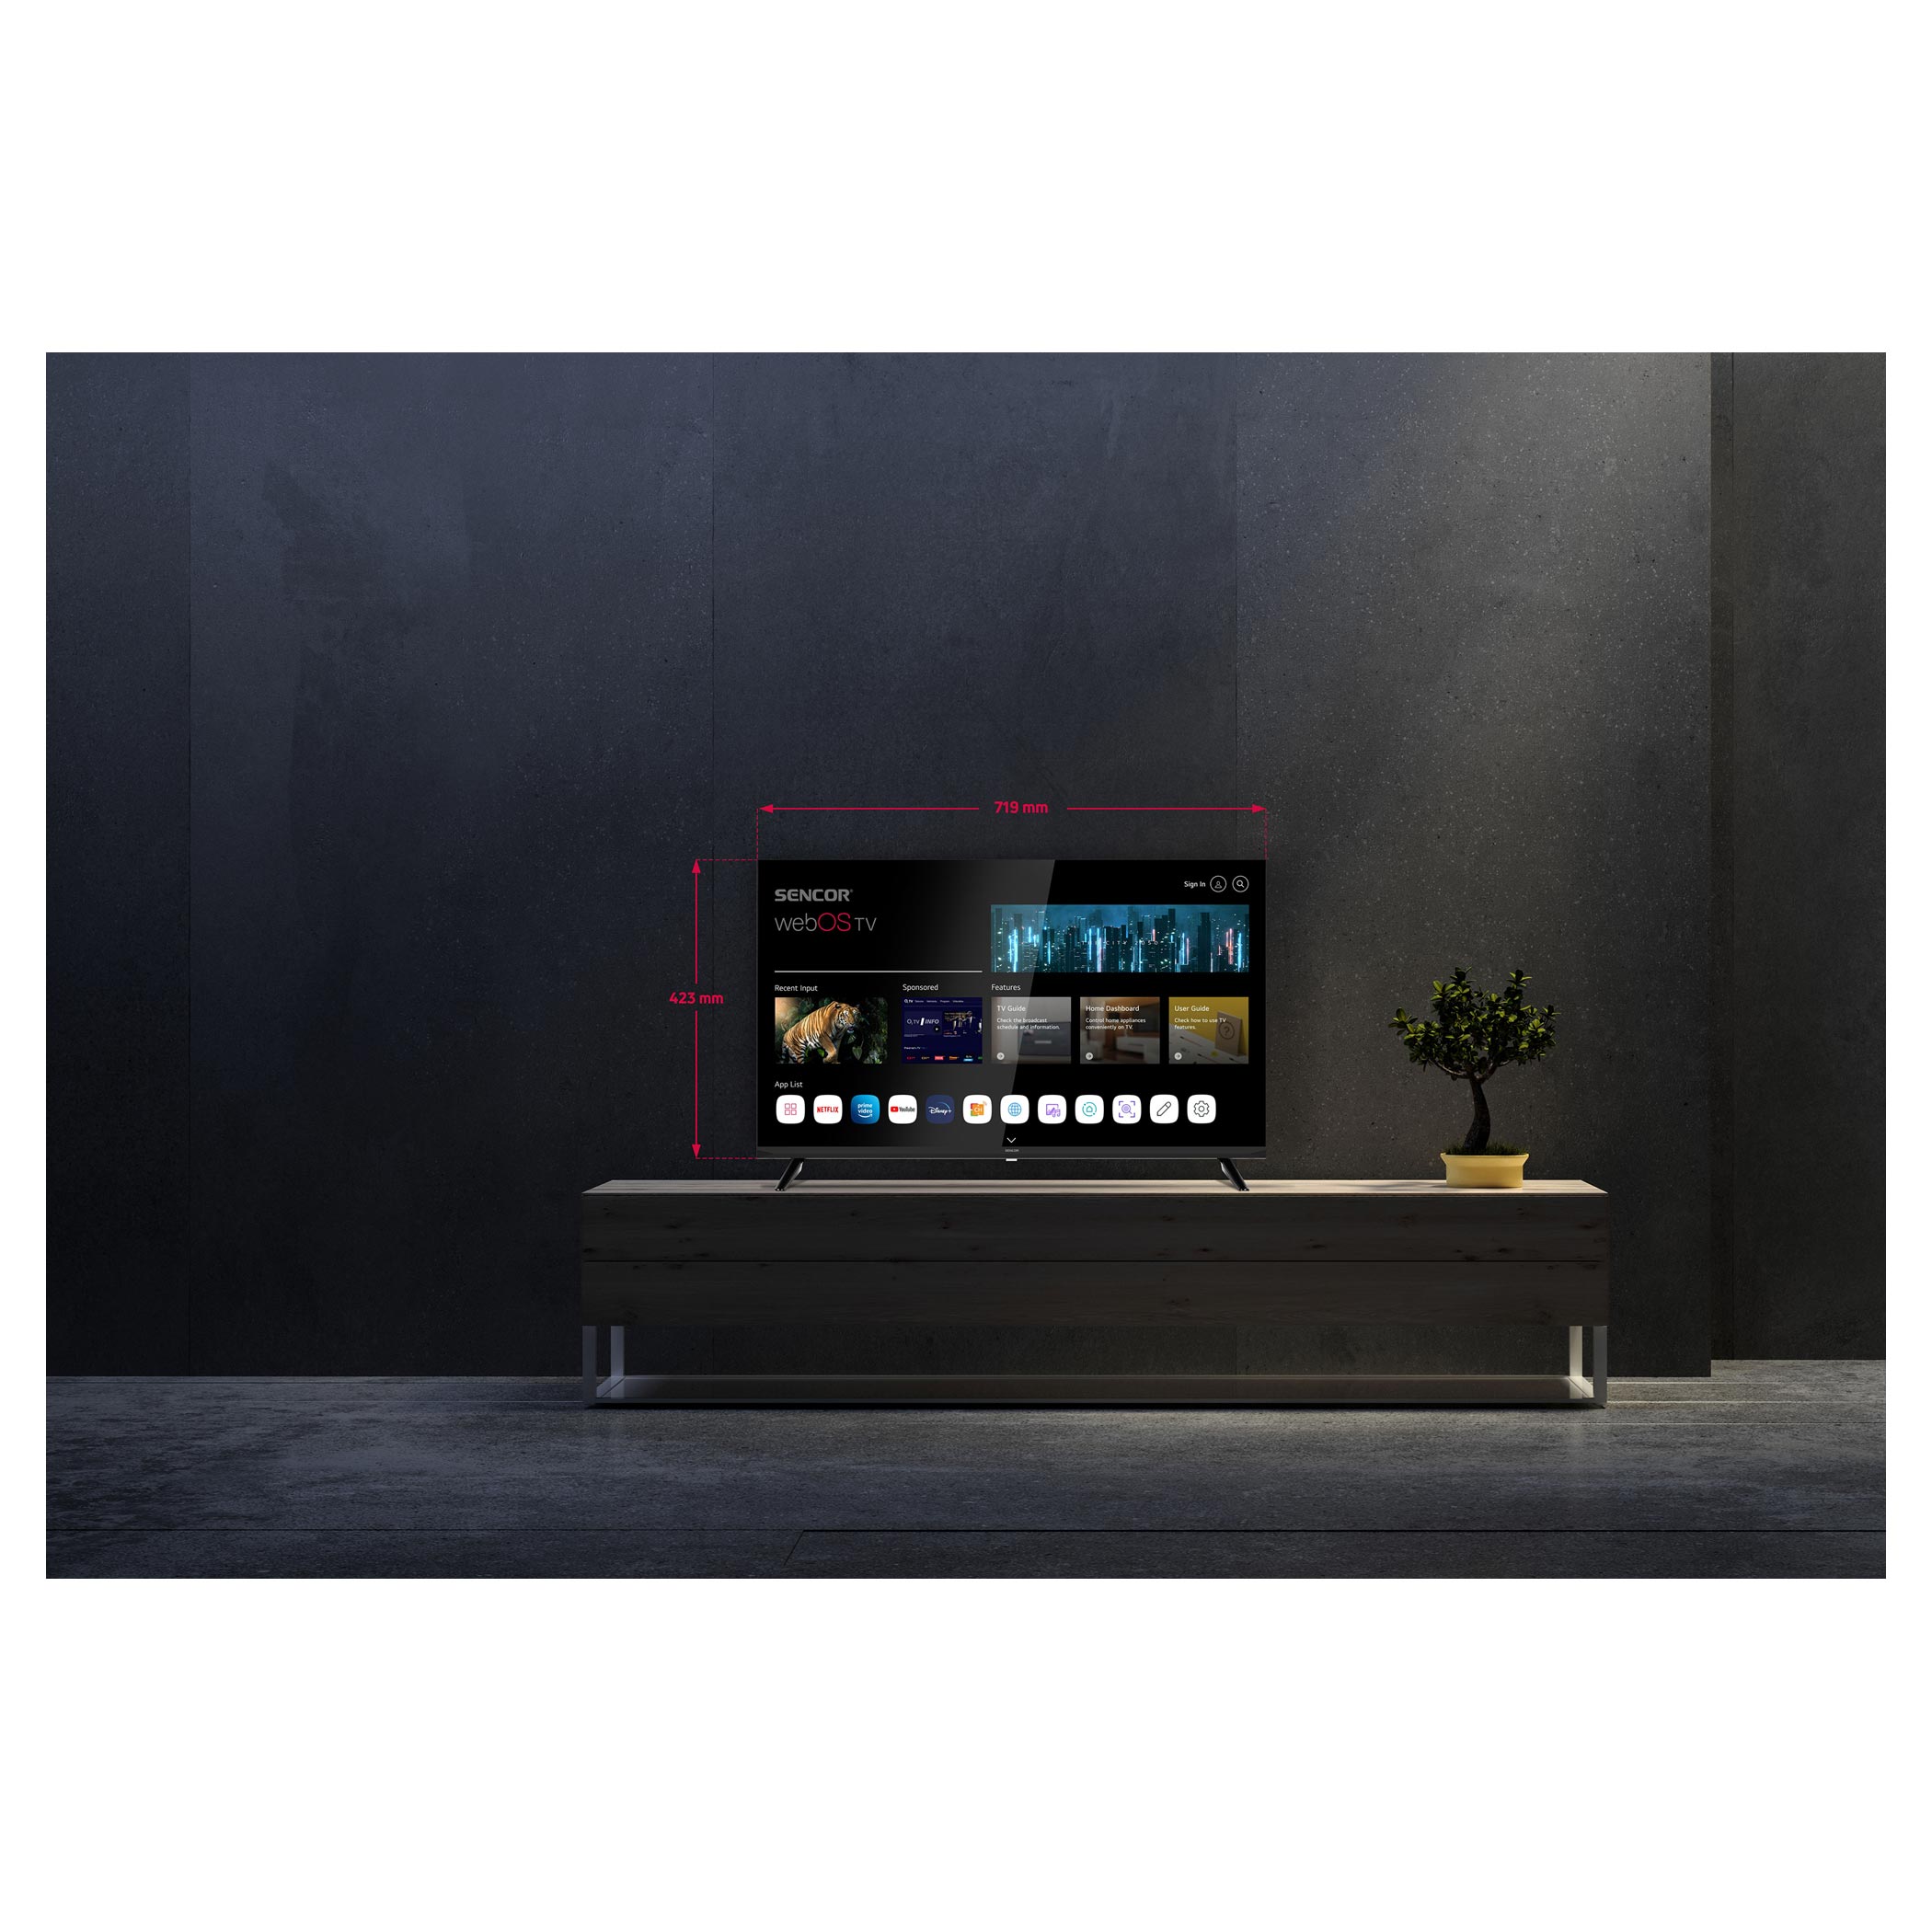 Find Smart, High-Quality dvb t2 tablet for All TVs 